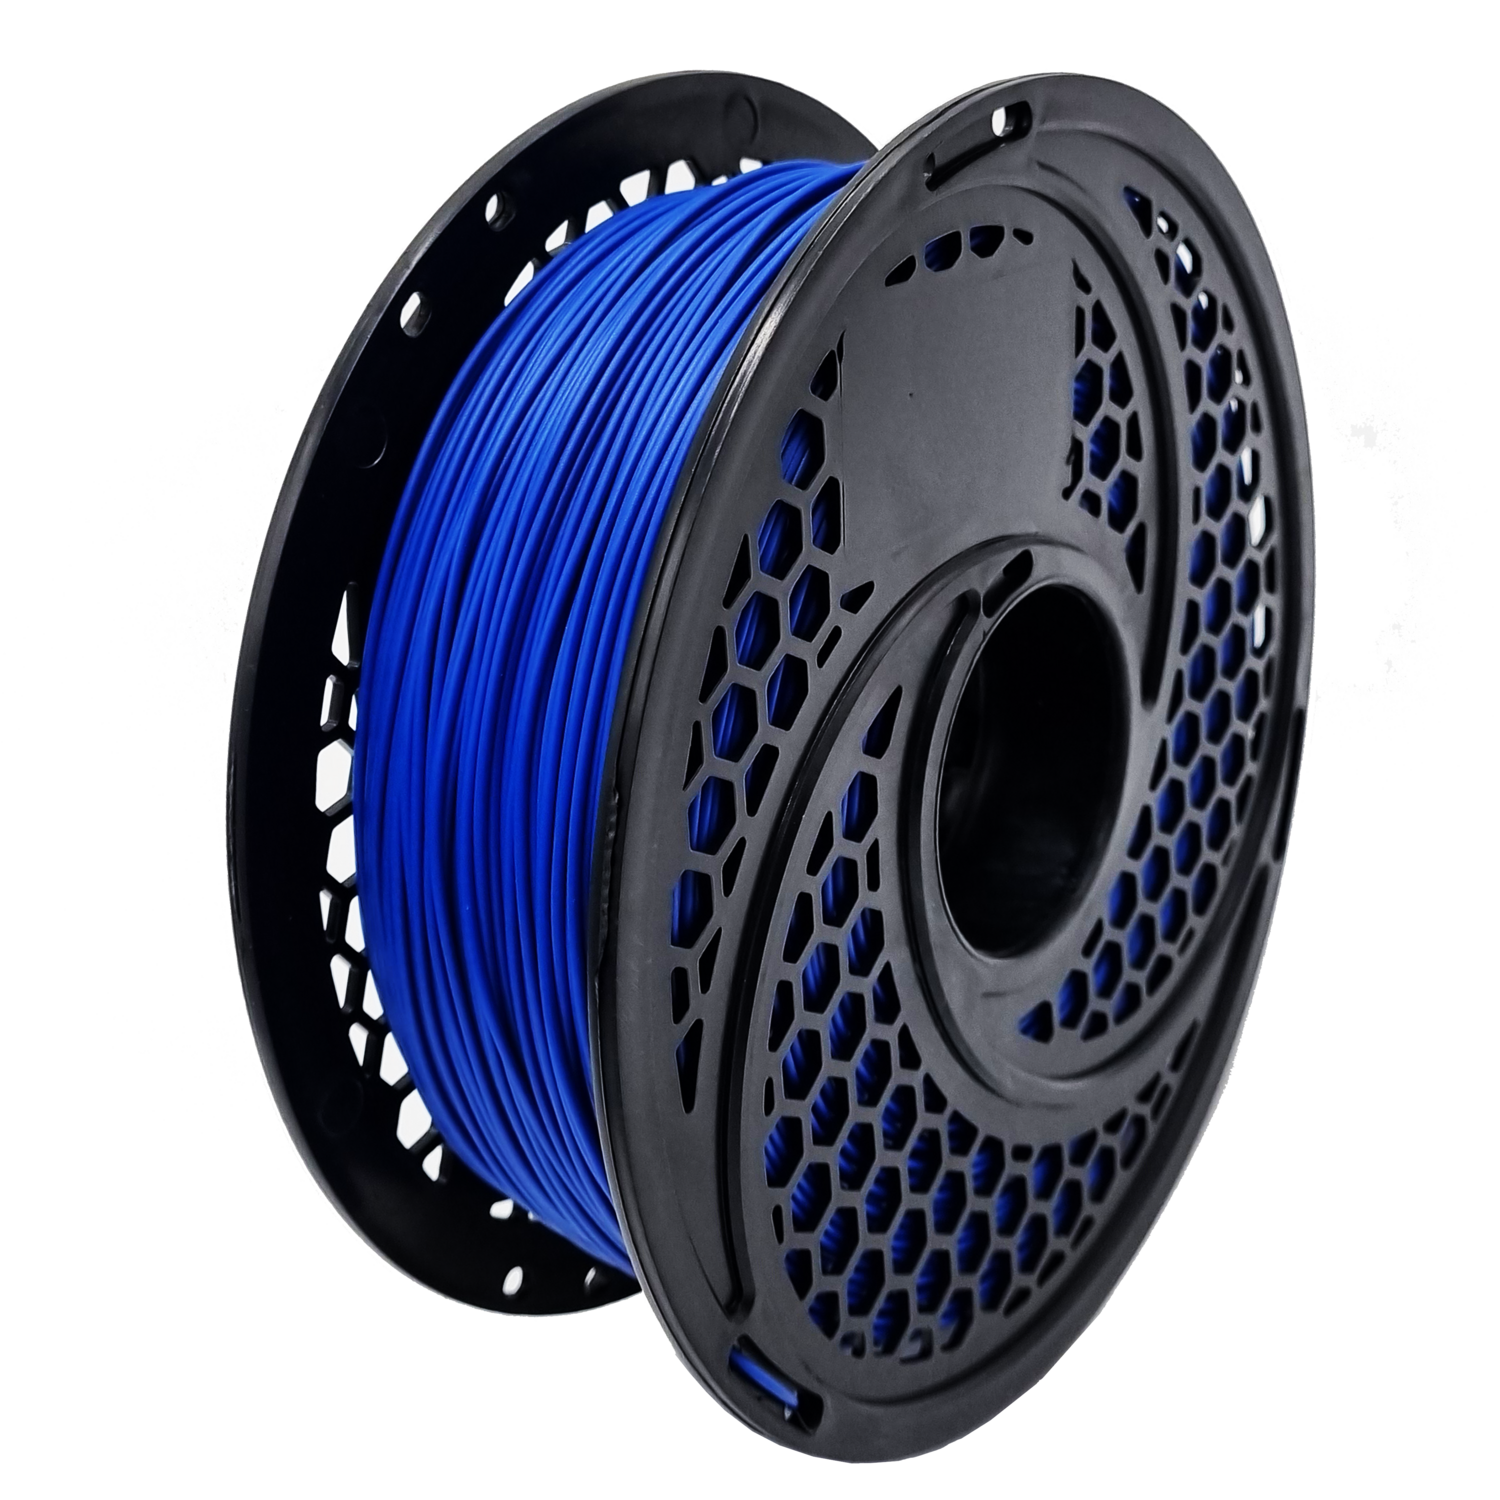 Blue Pro CPE+ Filament, 1Kg, 1.75mm by SA Filament